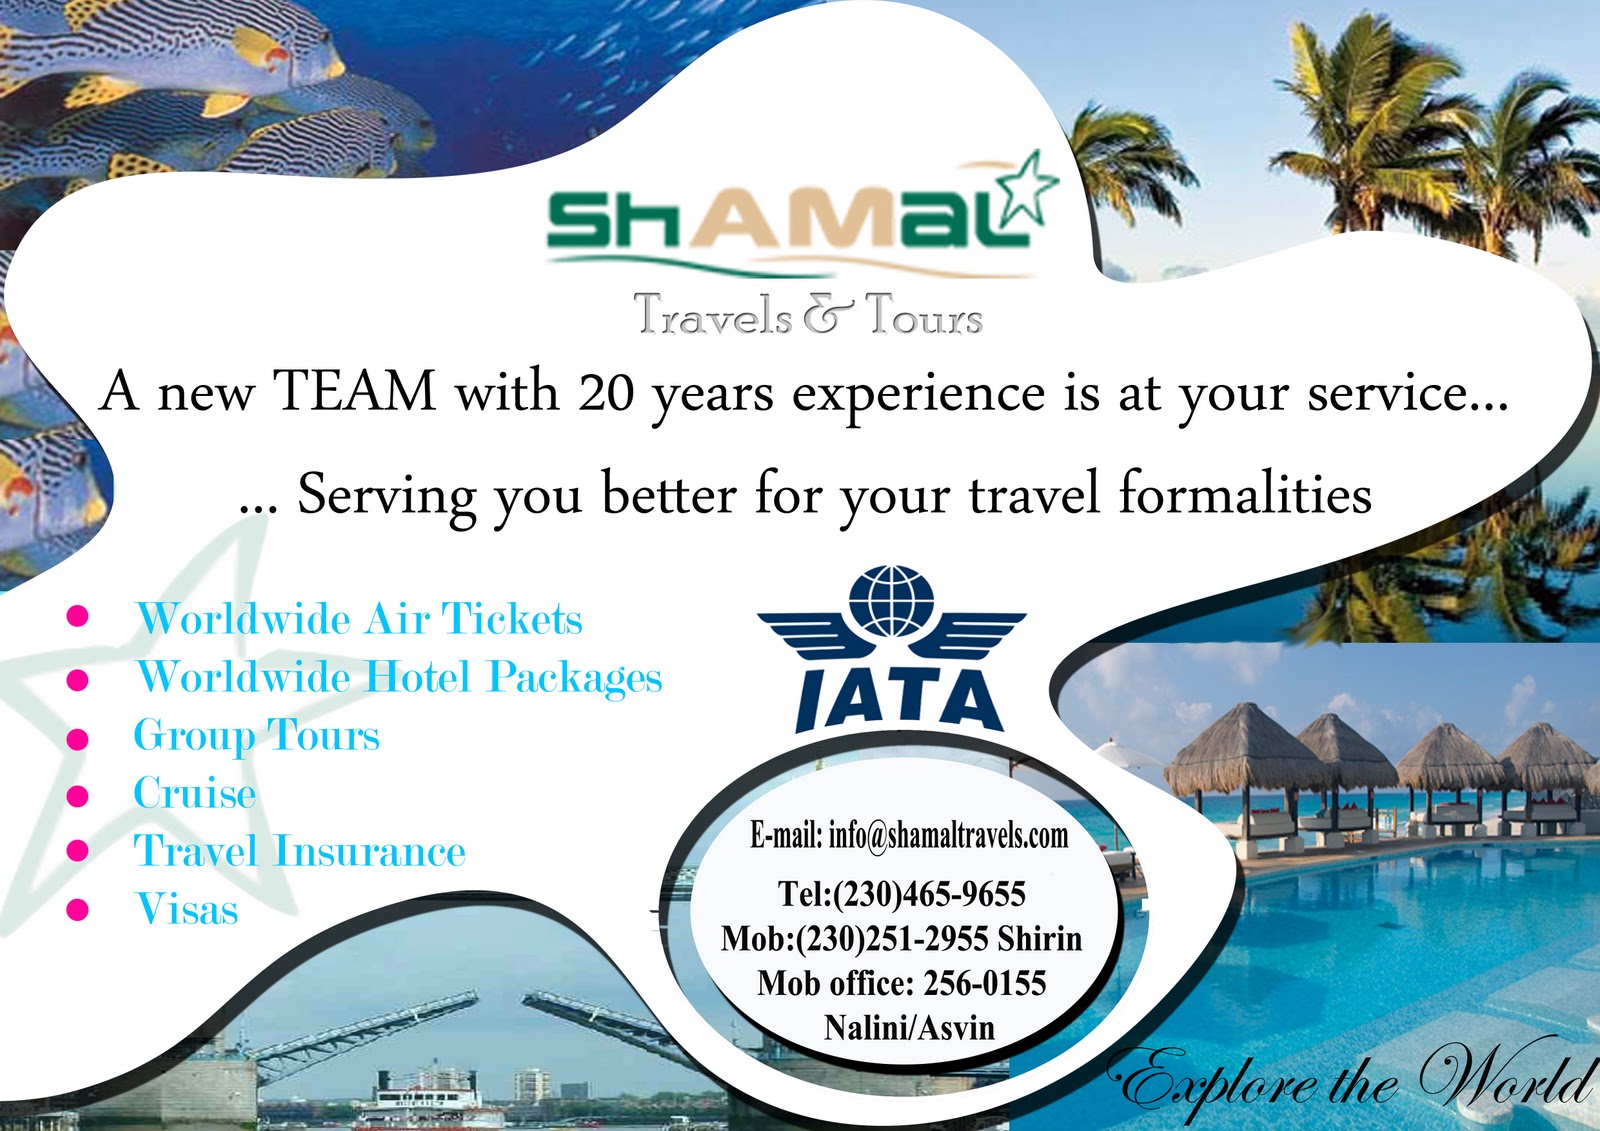 shamal travel online booking